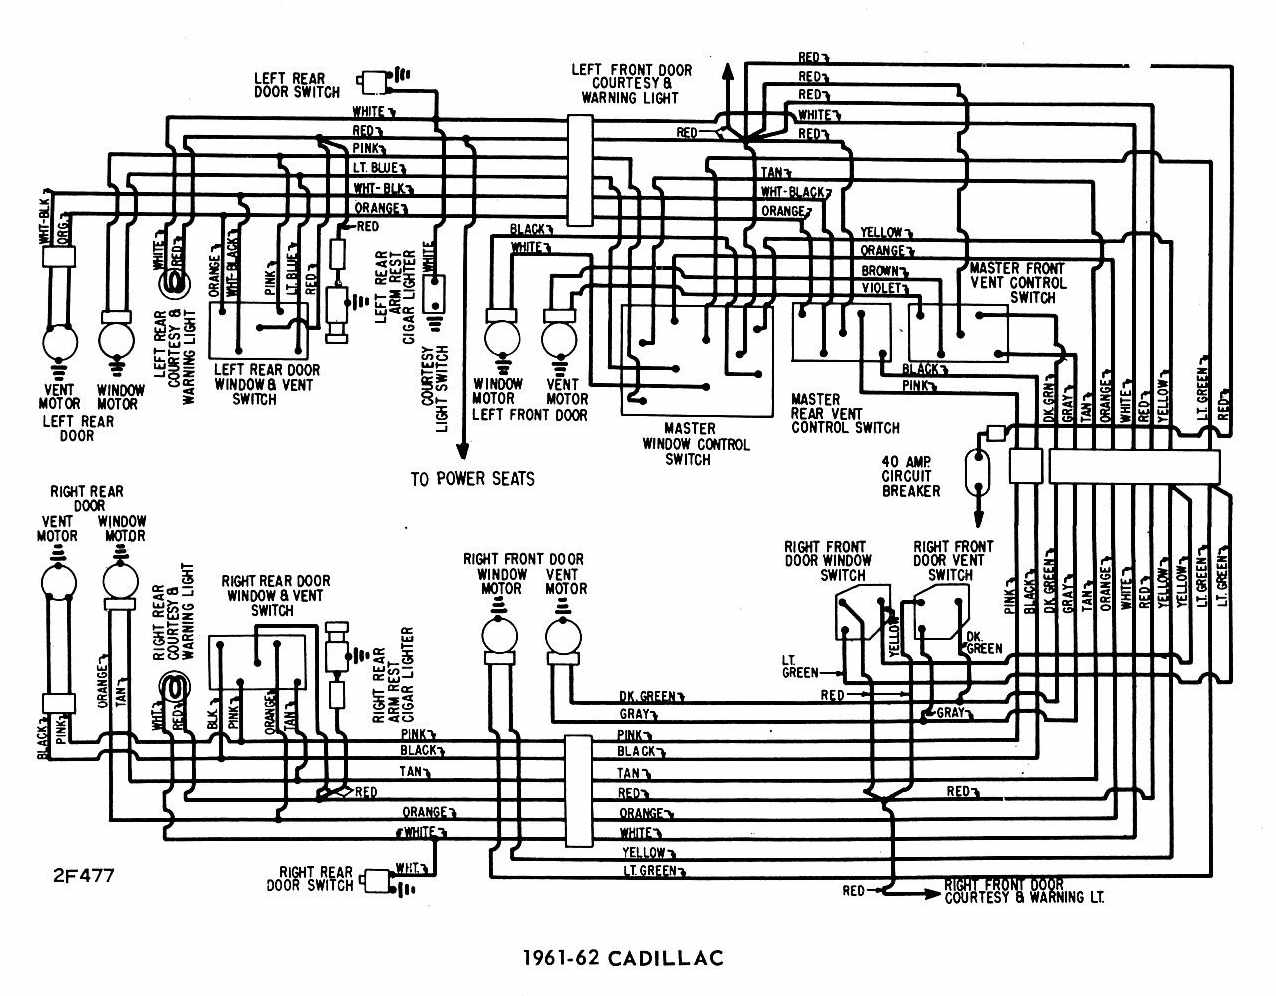 CADILLAC - Car PDF Manual, Wiring Diagram & Fault Codes DTC  2004 Cadillac Seville Sls Radio Wiring Diagram    automotive-manuals.net